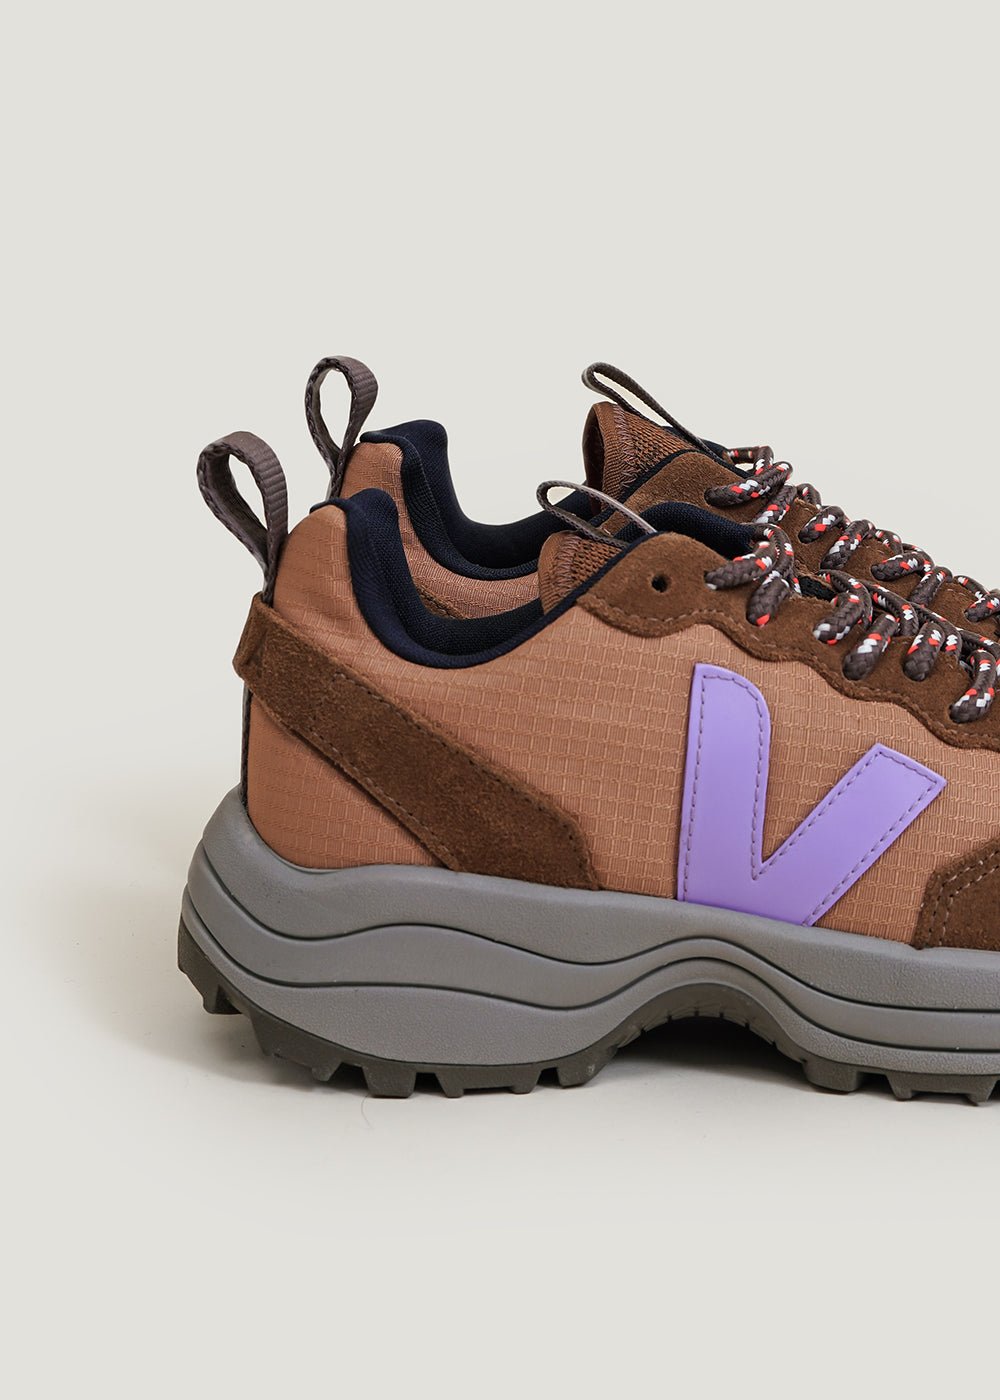 Veja Desert Lavande Venturi Sneakers - New Classics Studios Sustainable Ethical Fashion Canada